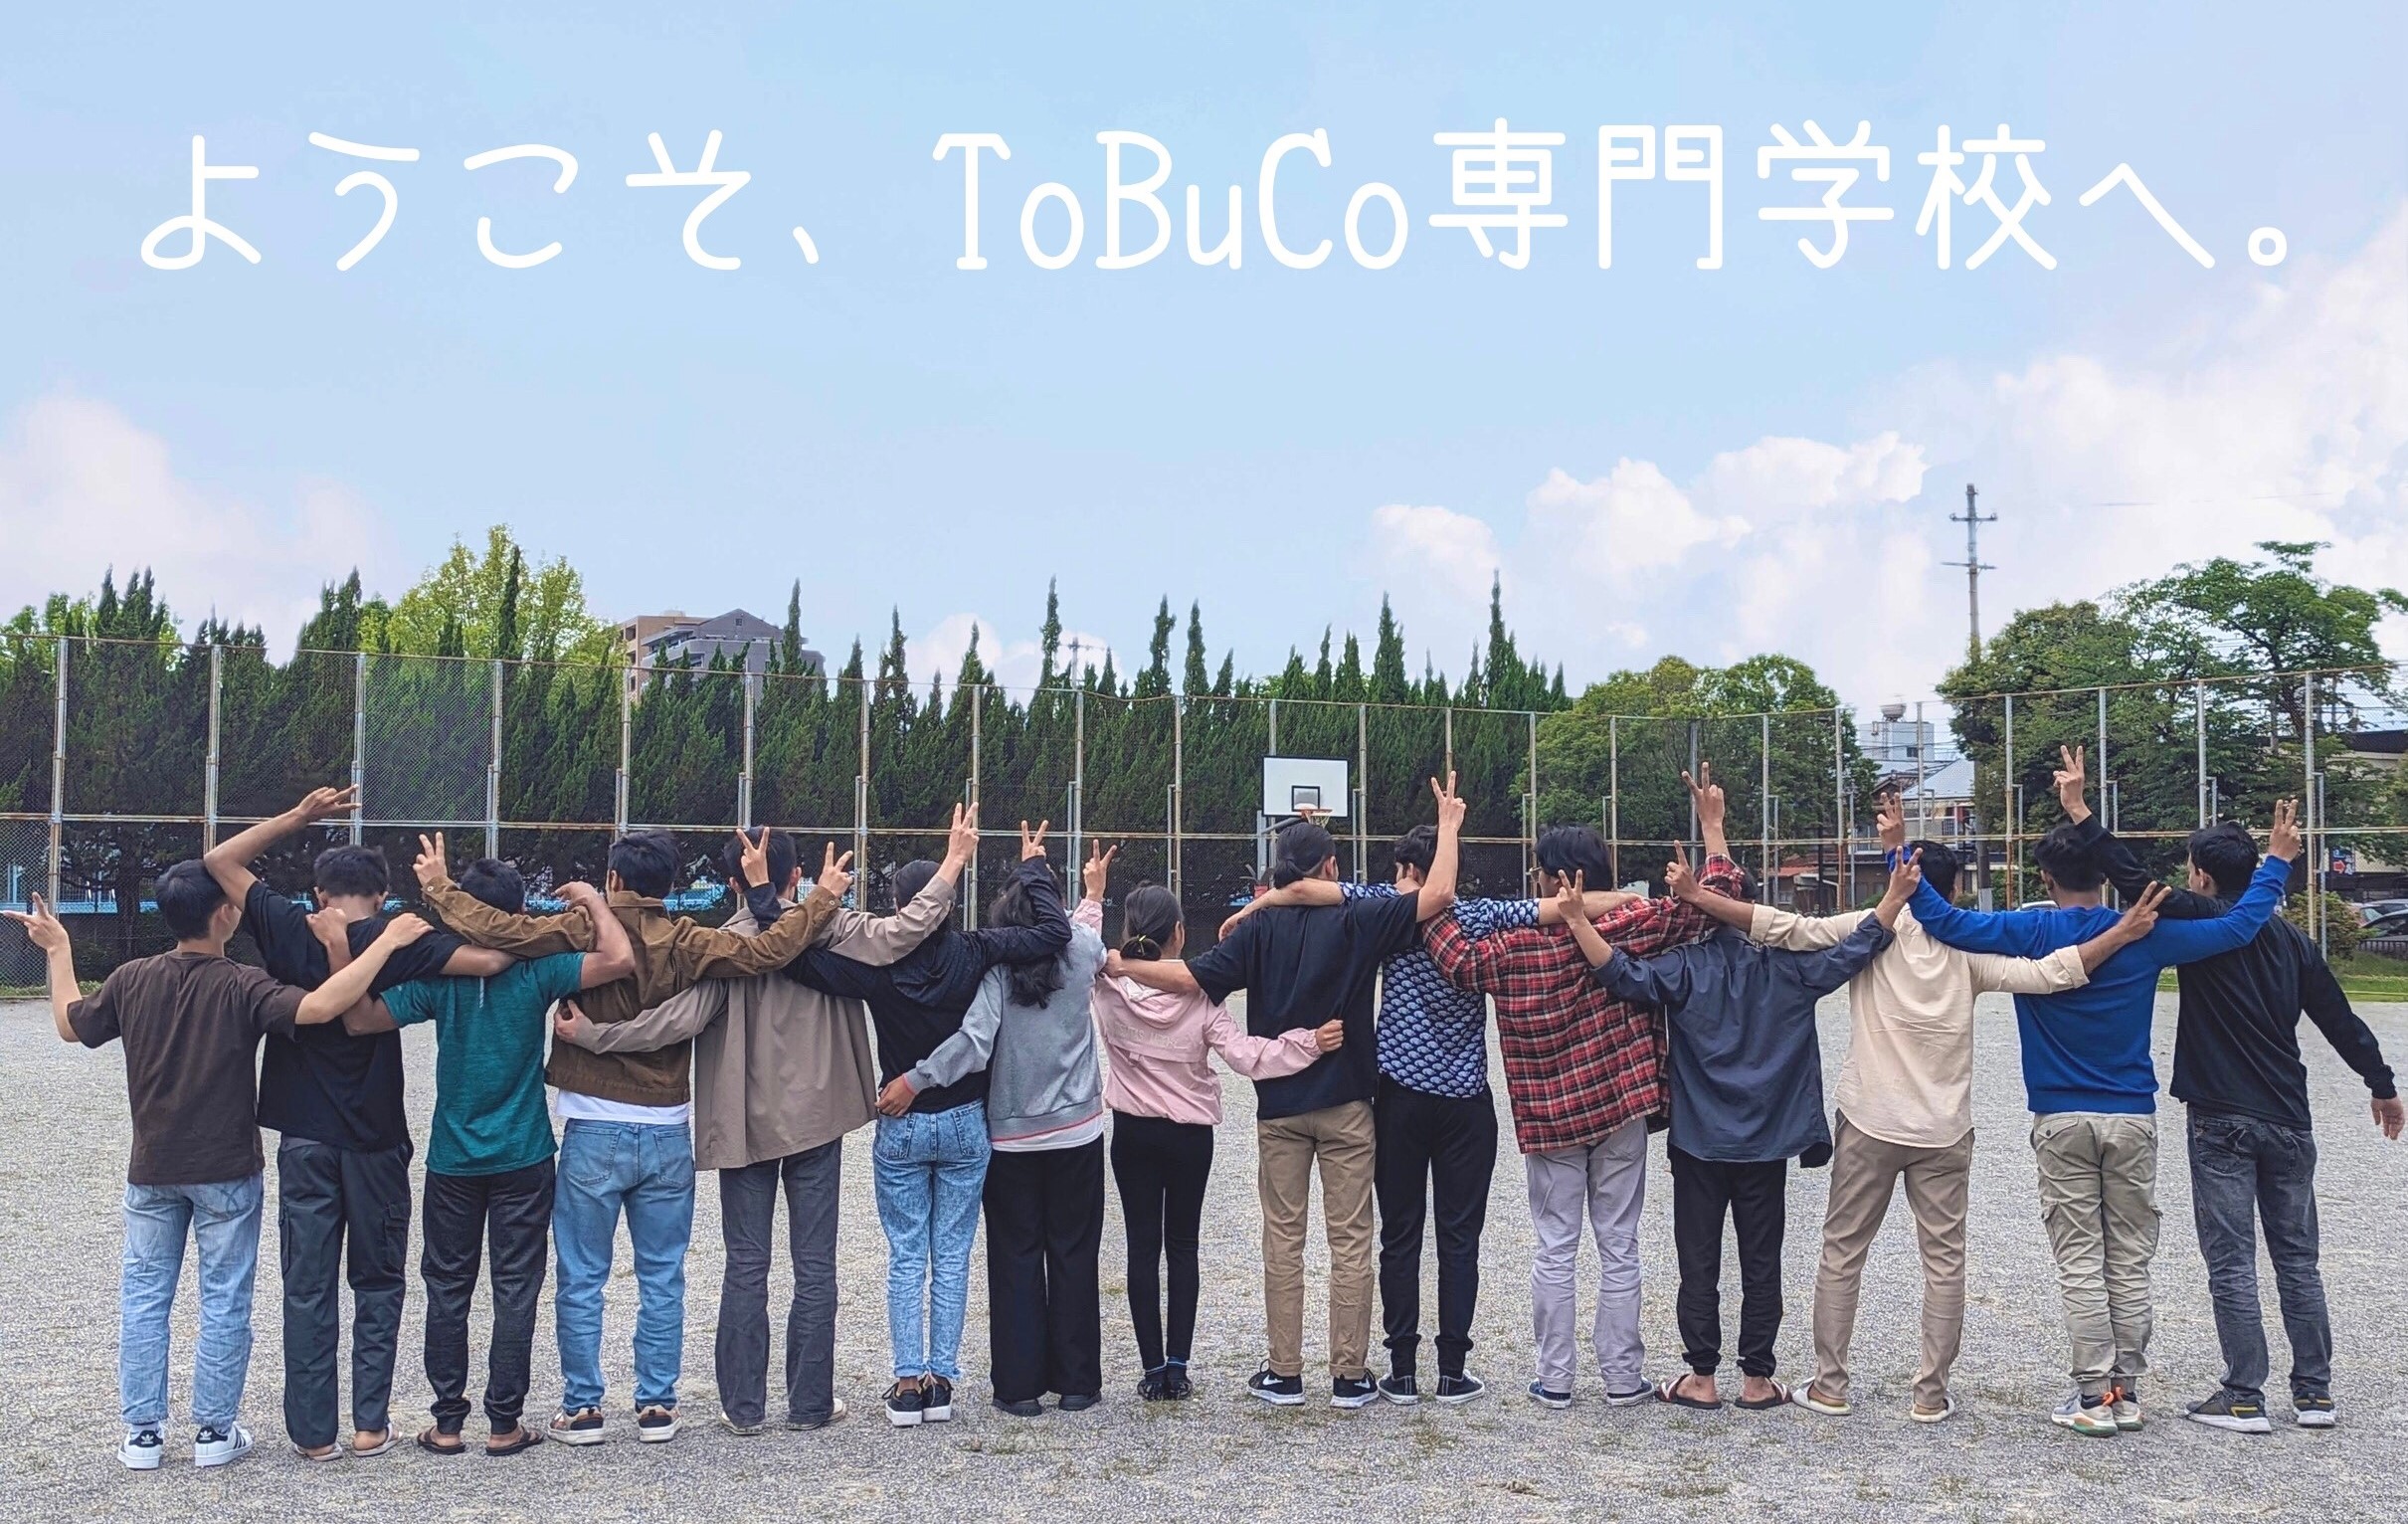 ToBuCo専門学校。肩を組む学生たちの姿